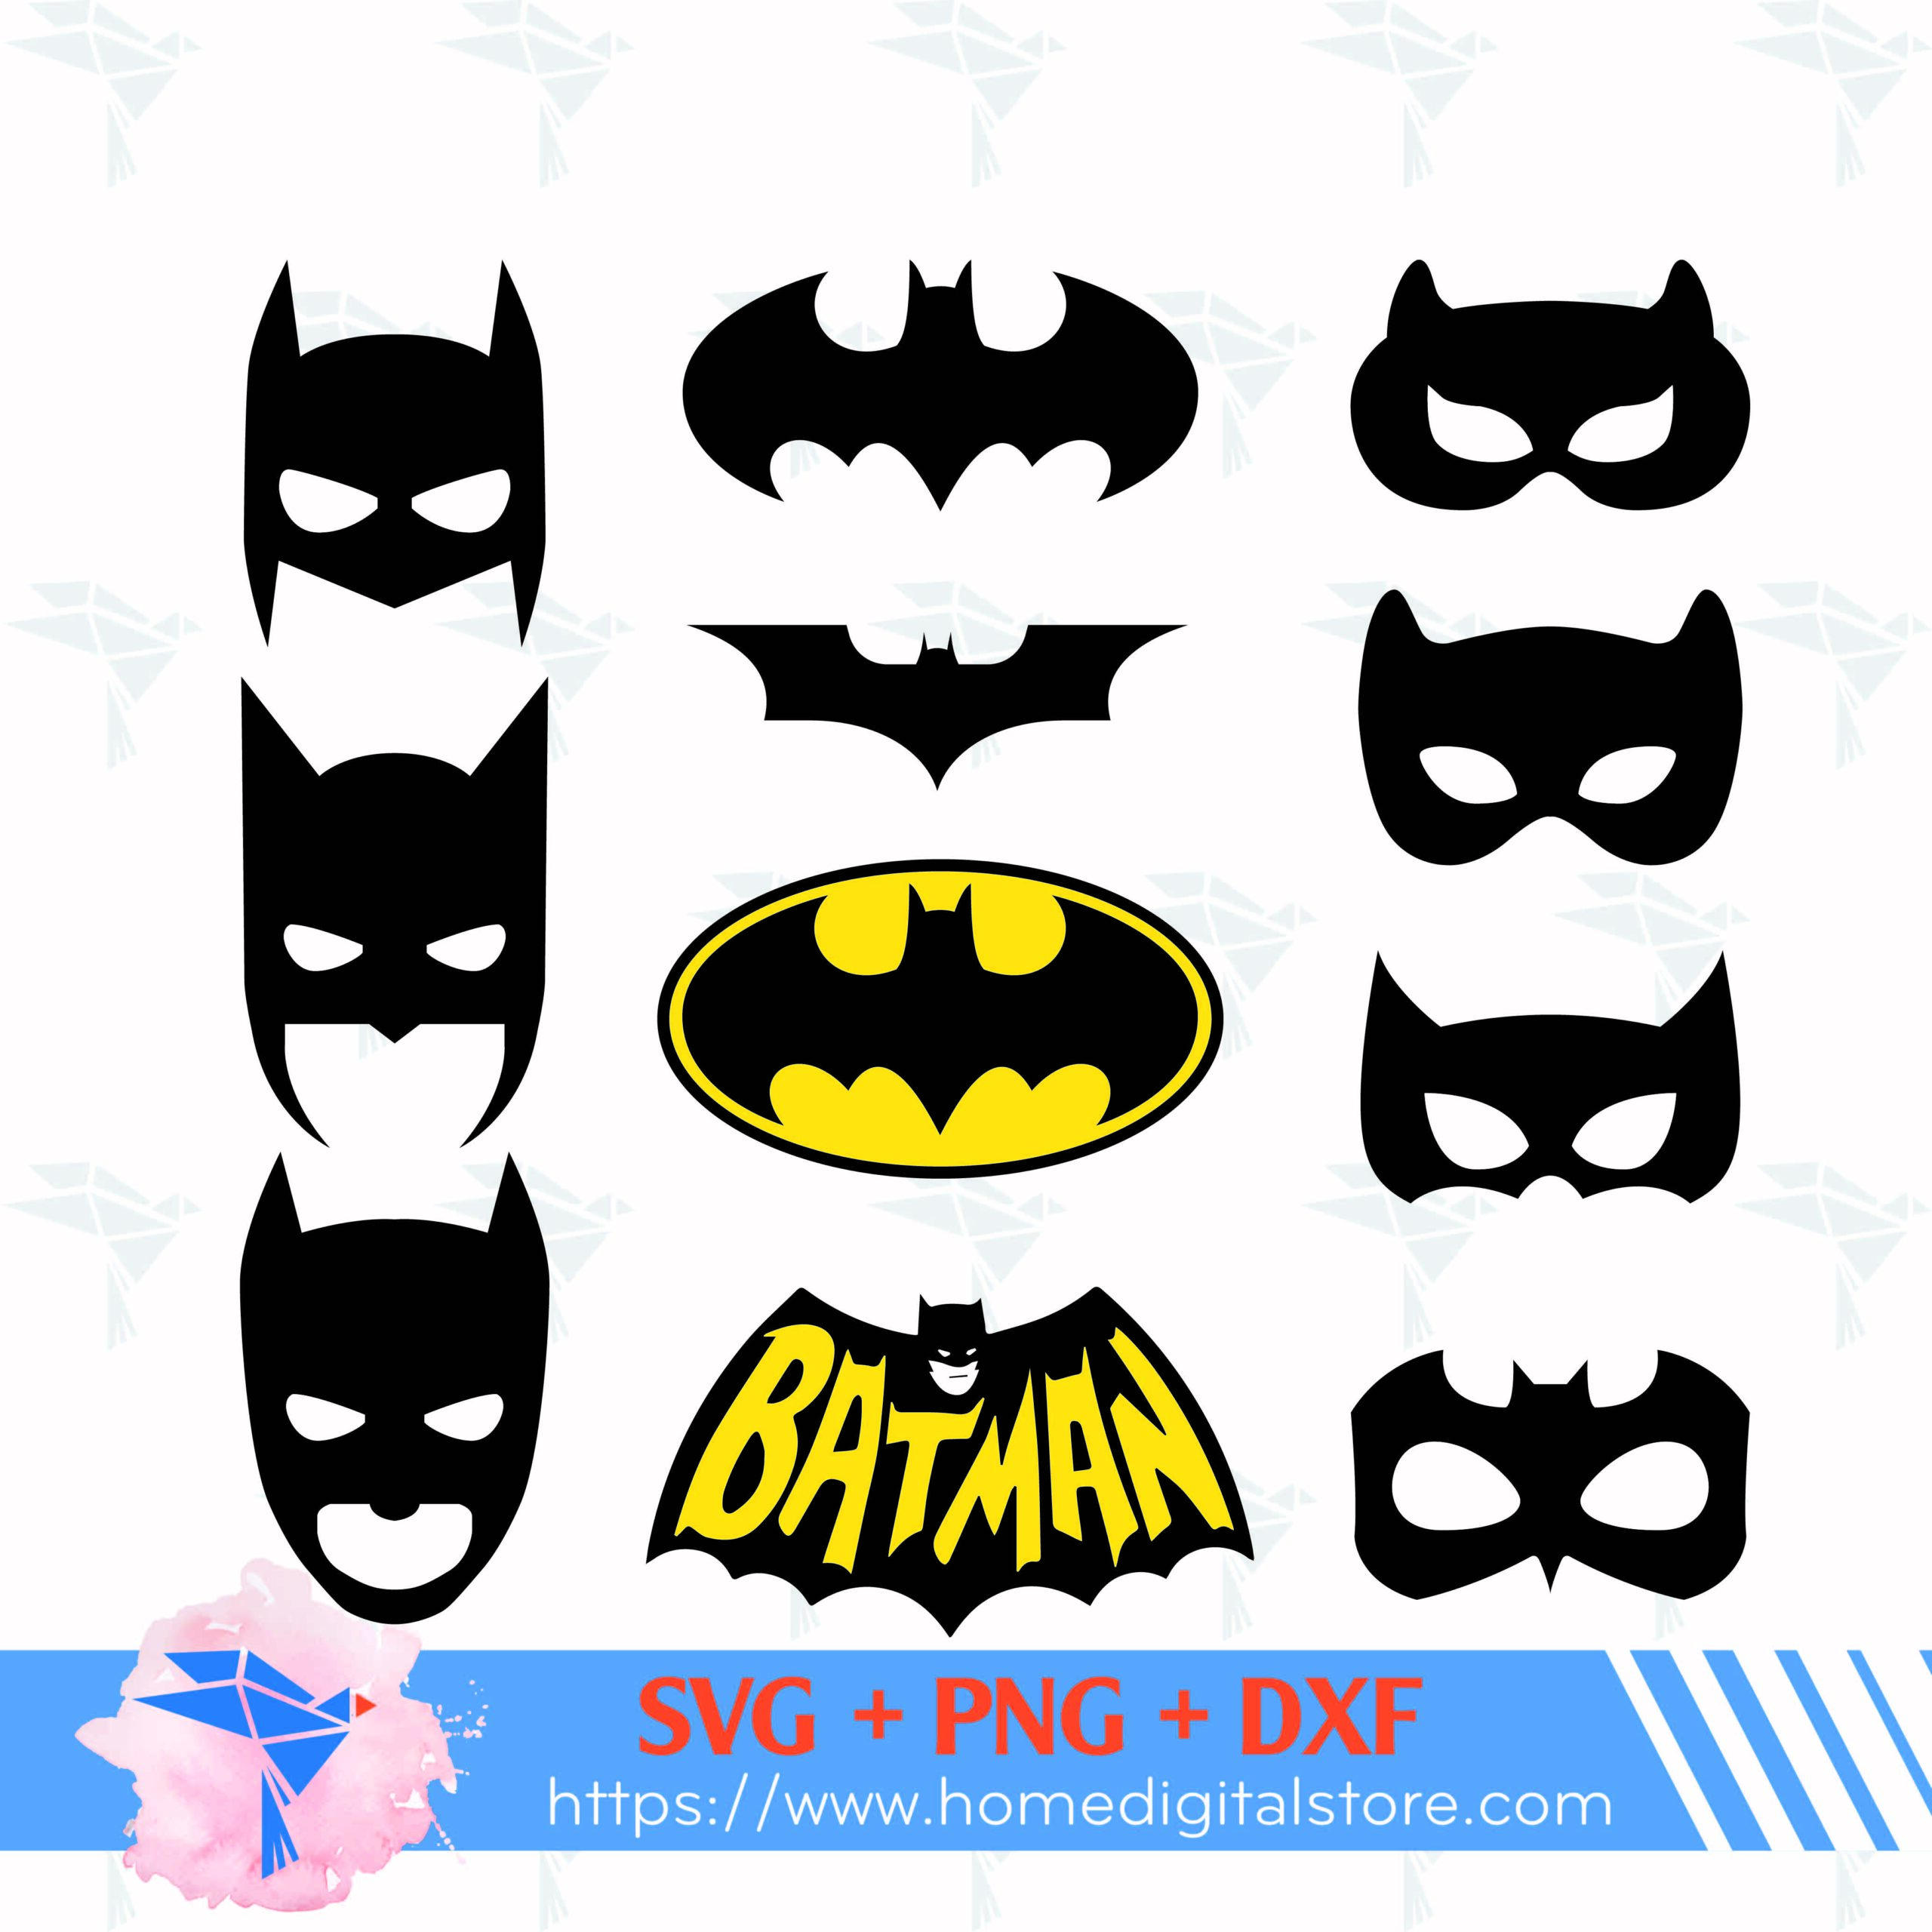 Batman Mask SVG, PNG, DXF